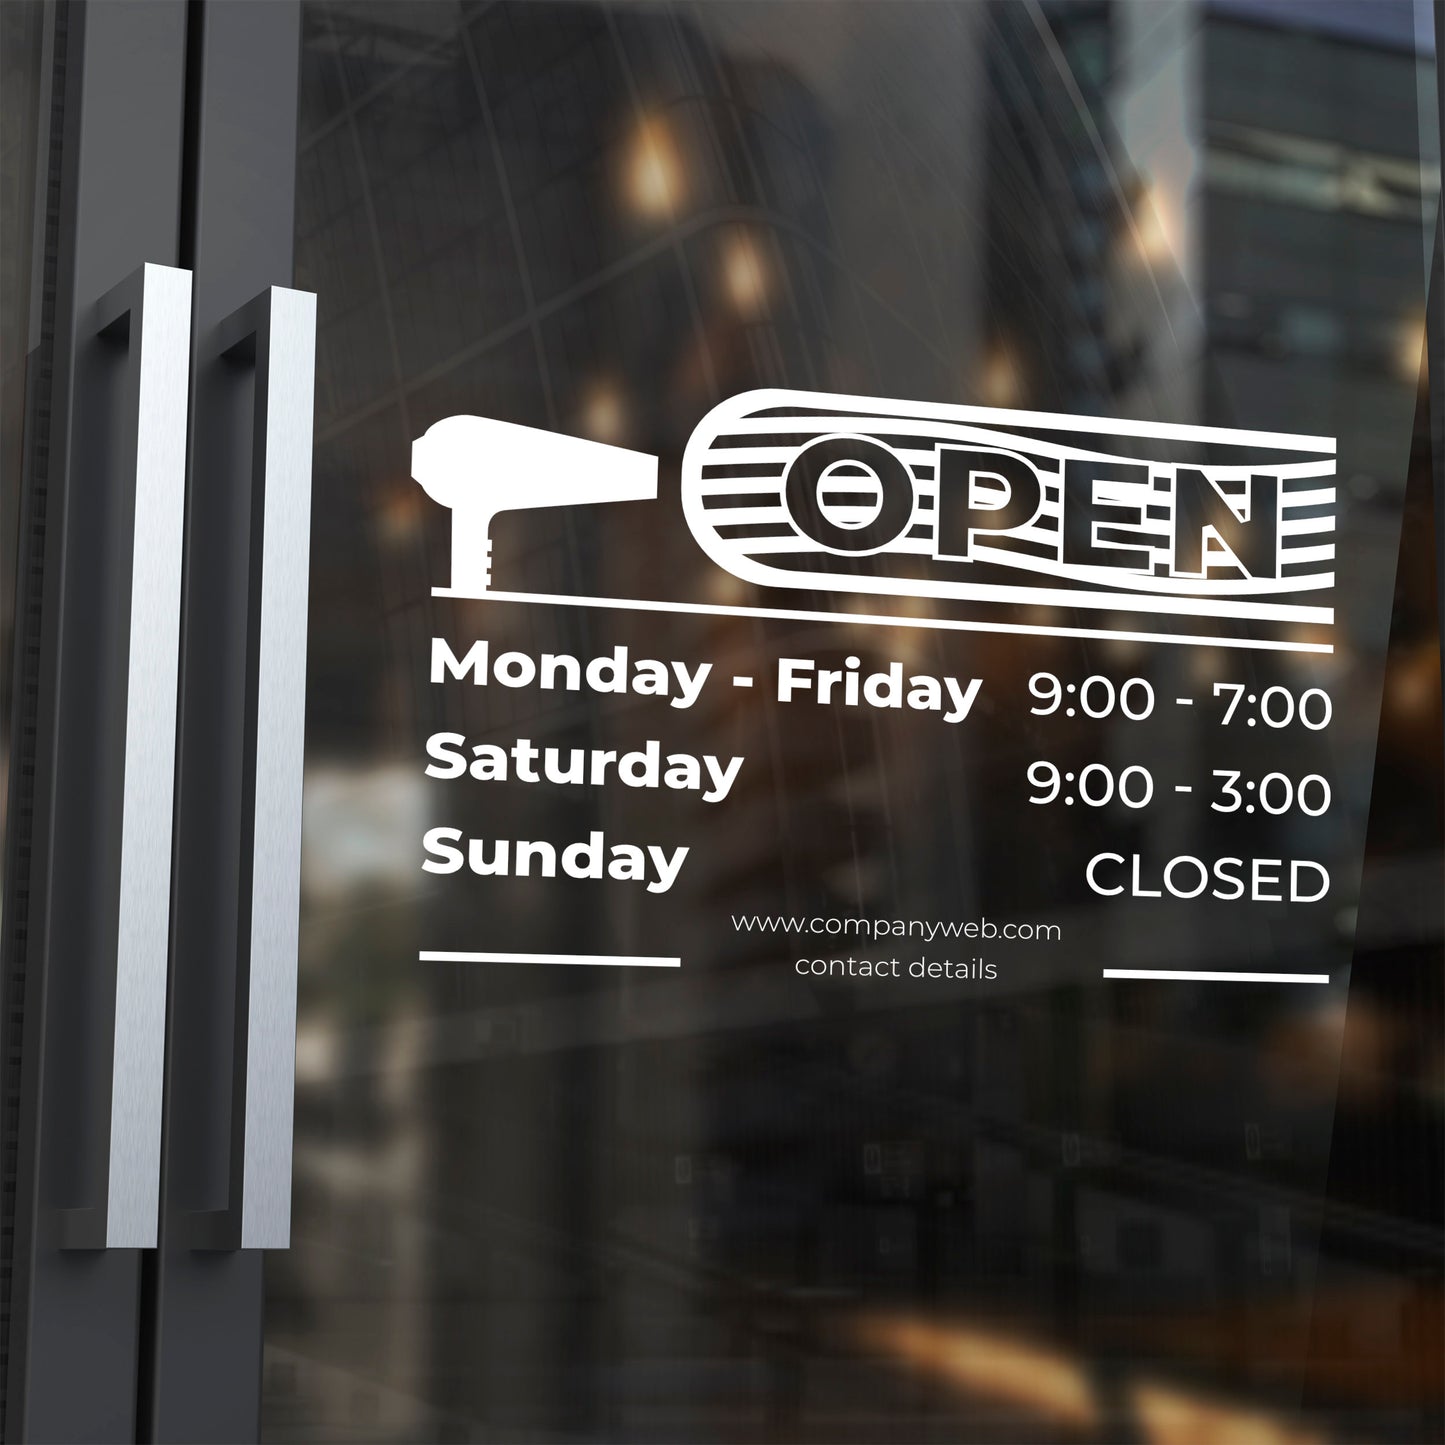 Hours of Operation - Vinyl on Barbershop Door Window - Website Store Hours - Your Company Logo Operation hours - Storefront Window Sticker